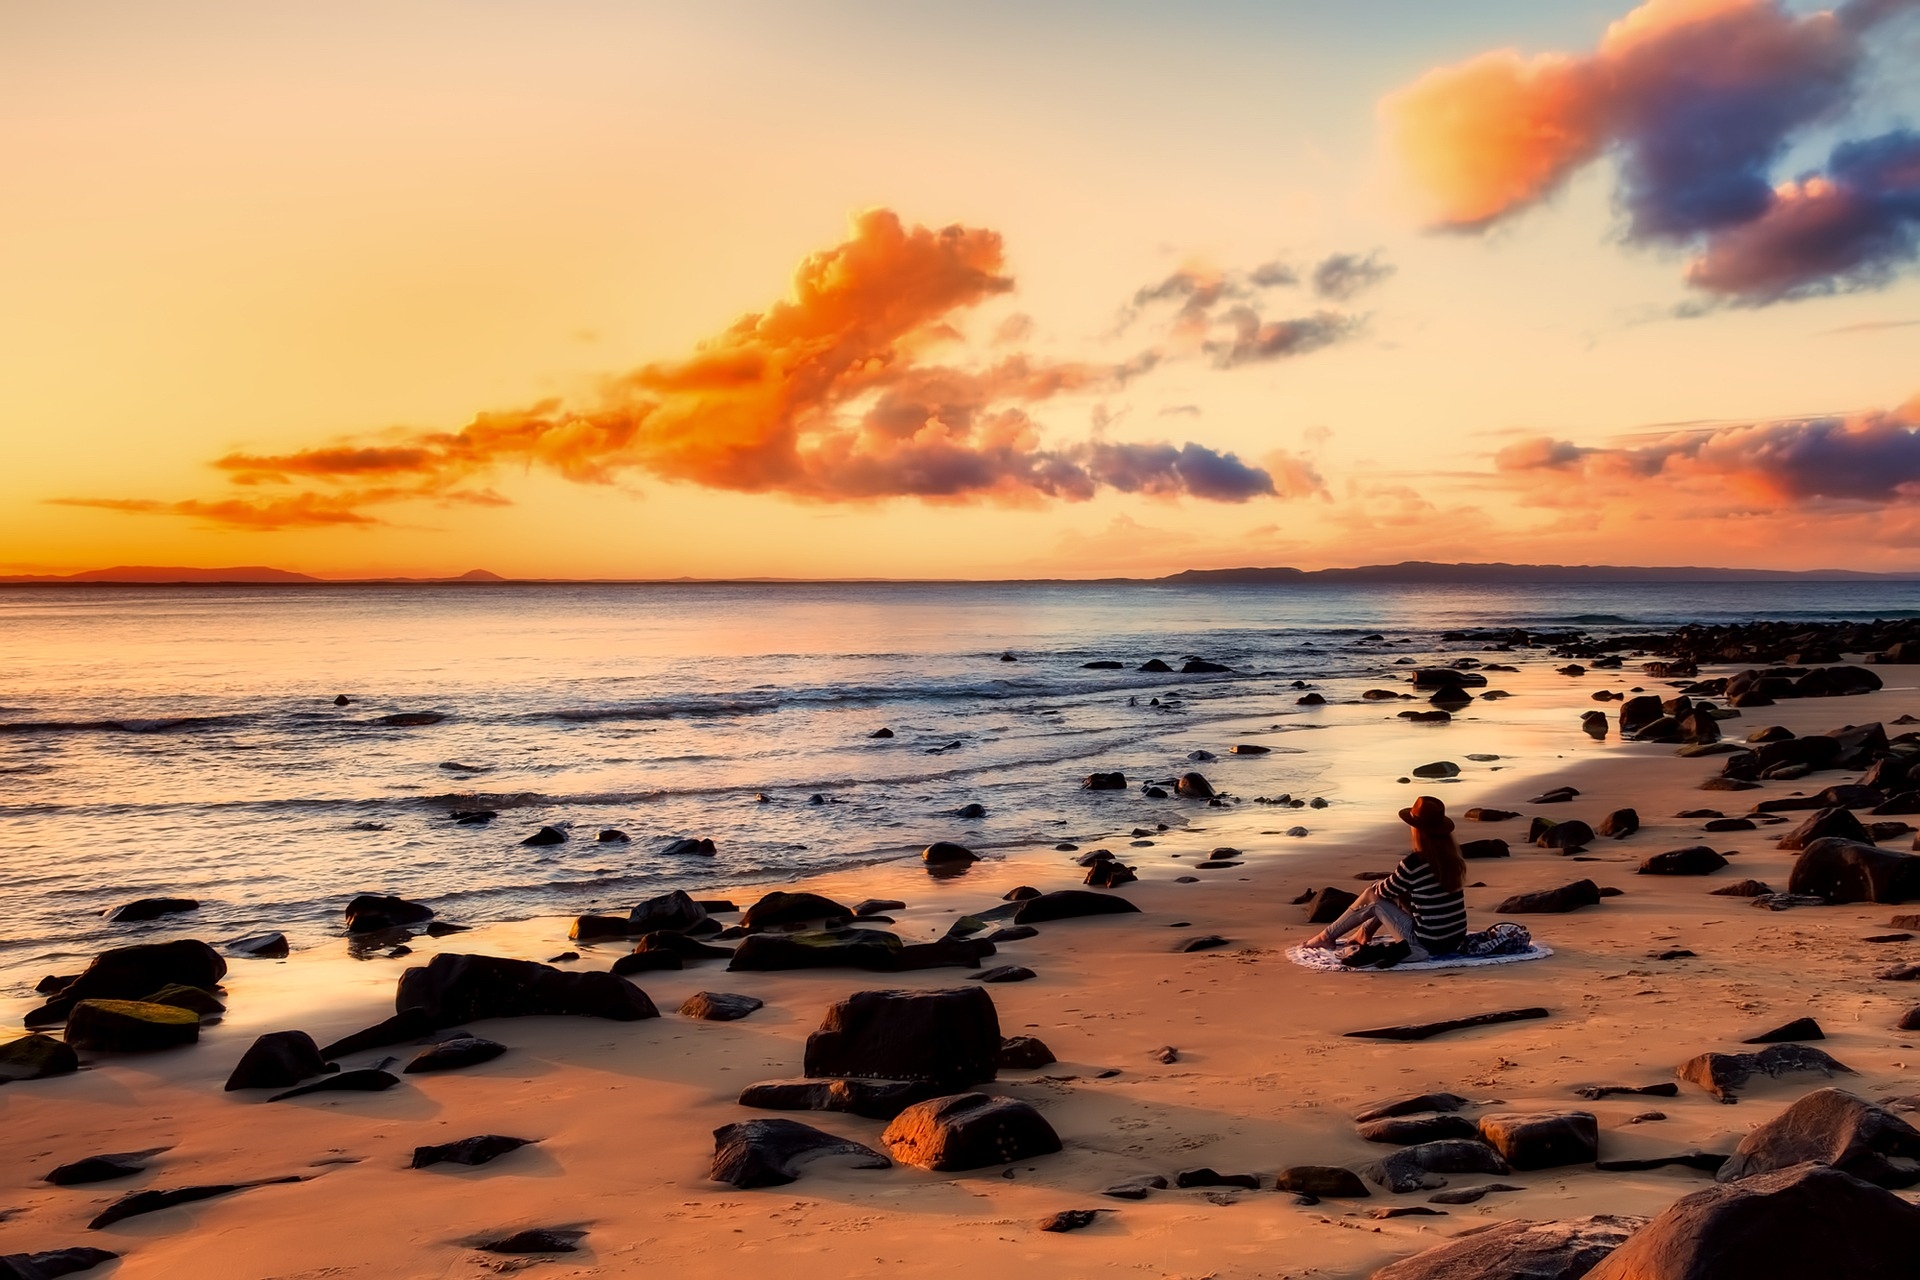 https://pixabay.com/en/sea-ocean-beach-woman-girl-sunset-2530231/